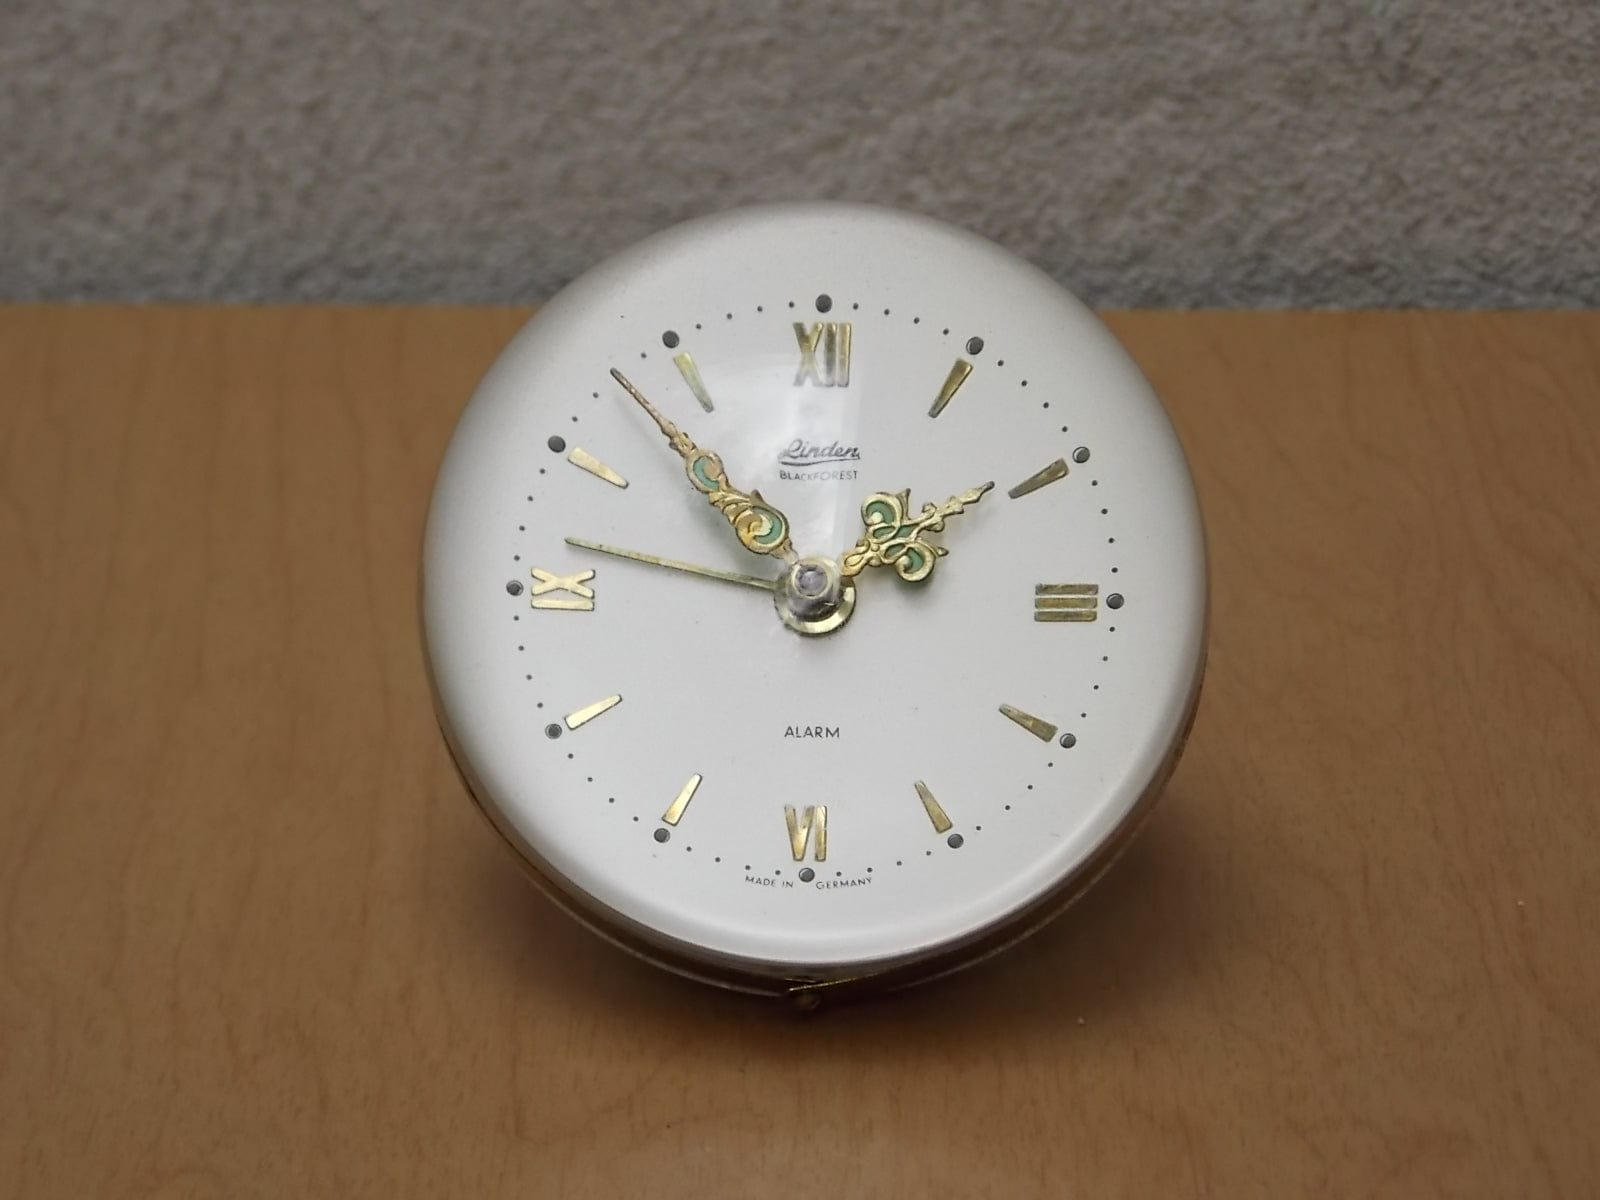 I Like Mike's Mid Century Modern Clock Linden Blackforest Round Bubble Alarm Clock